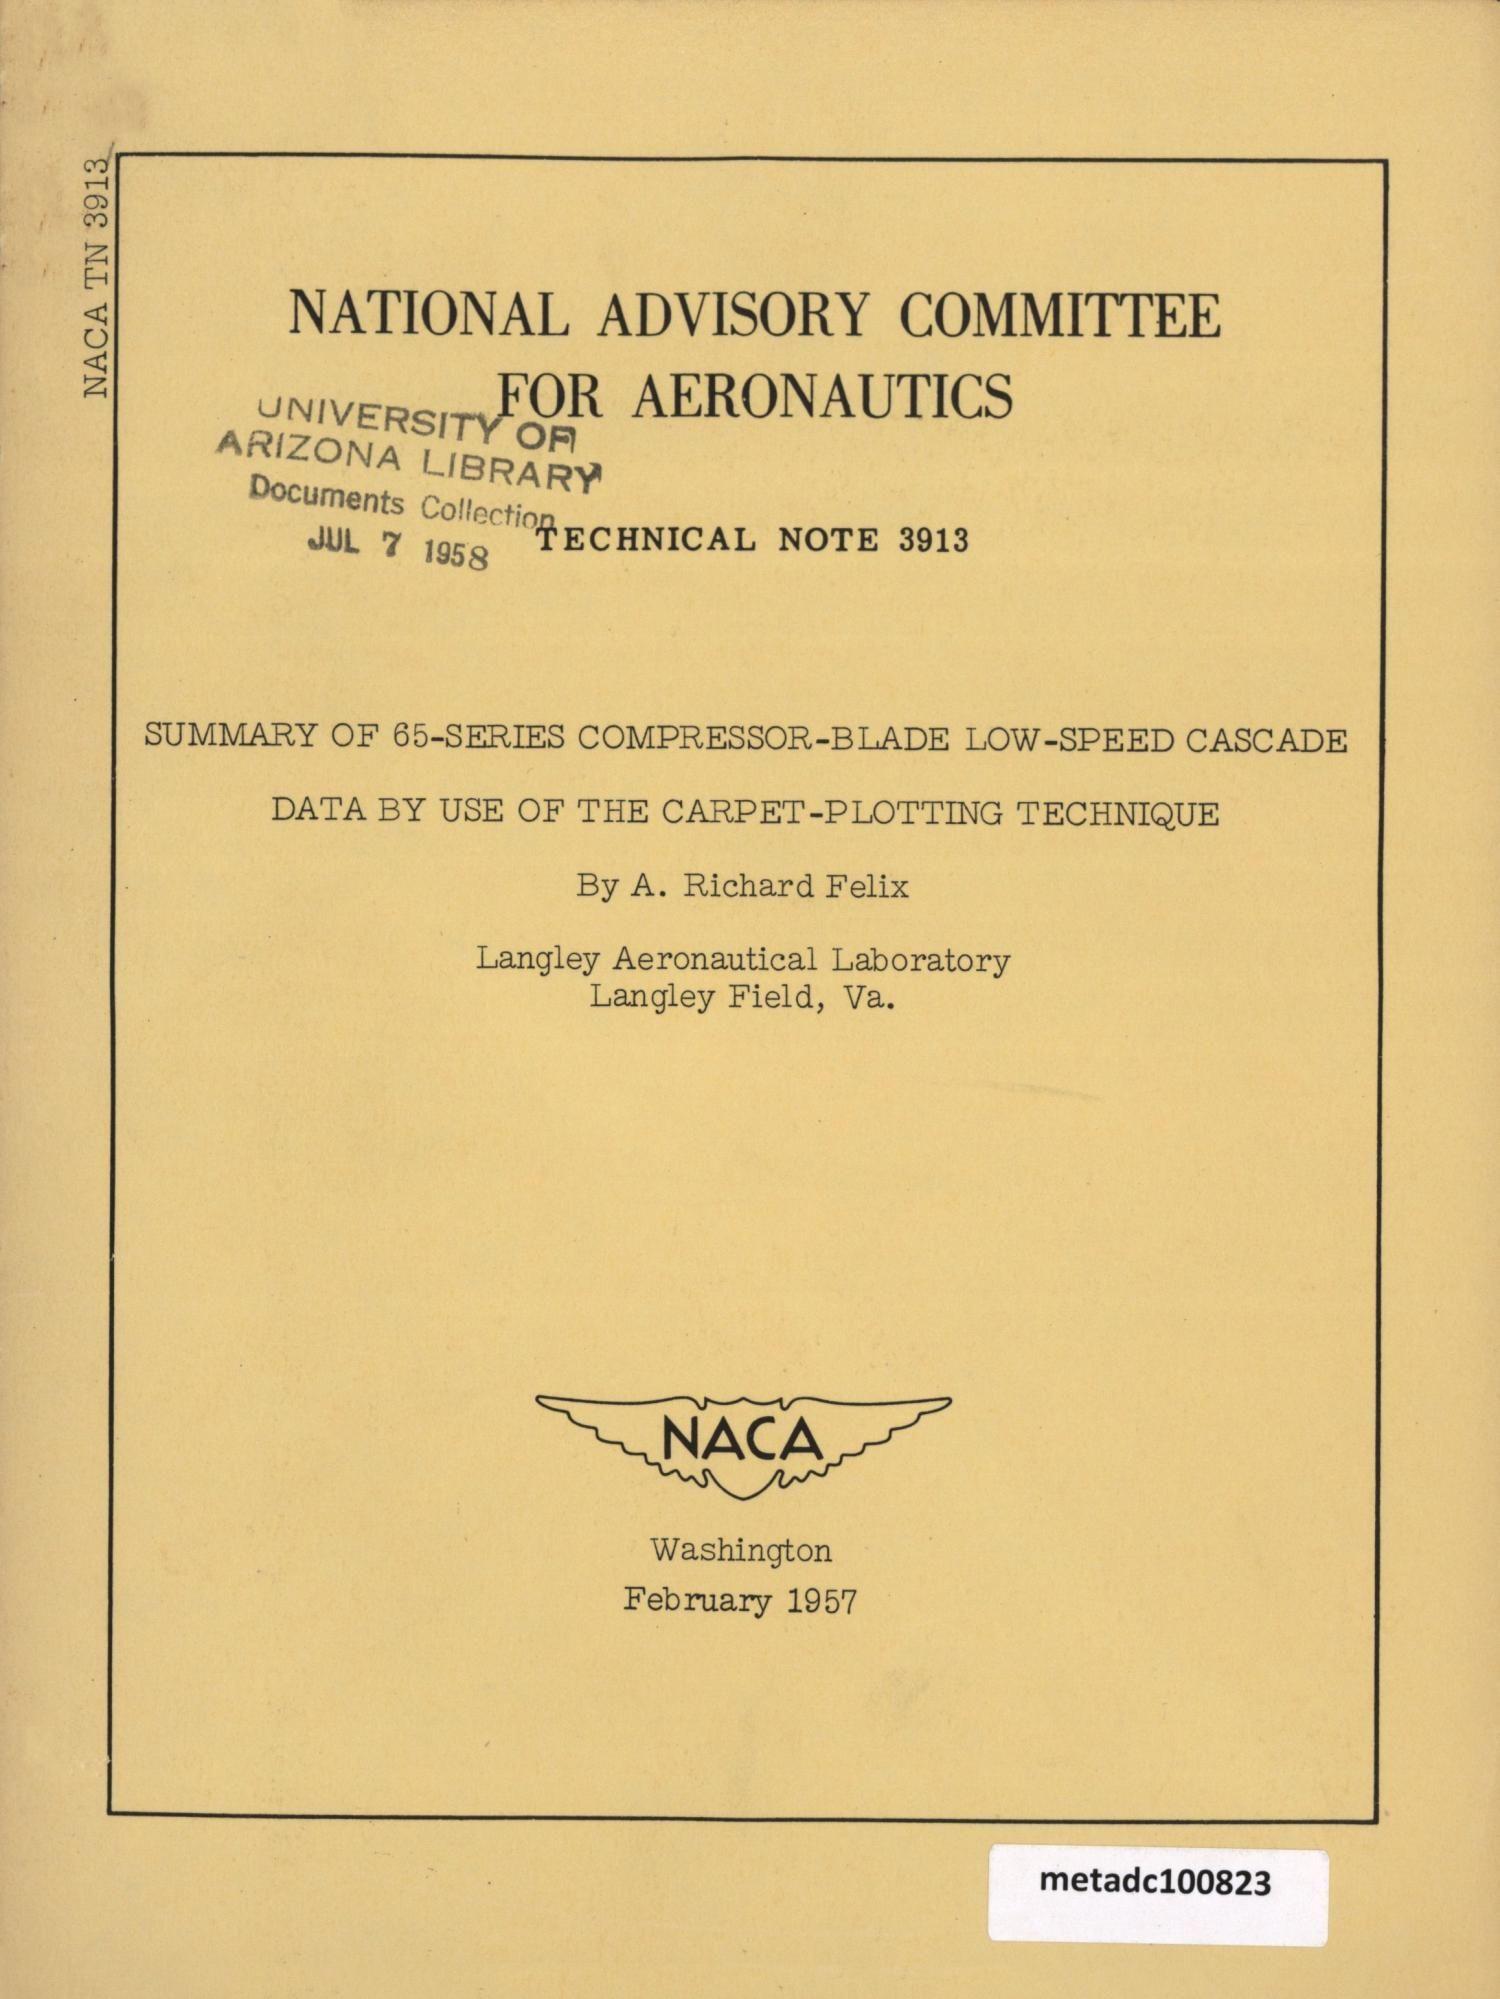 Aeronautics NACA Logo - National Advisory Committee for Aeronautics (NACA)